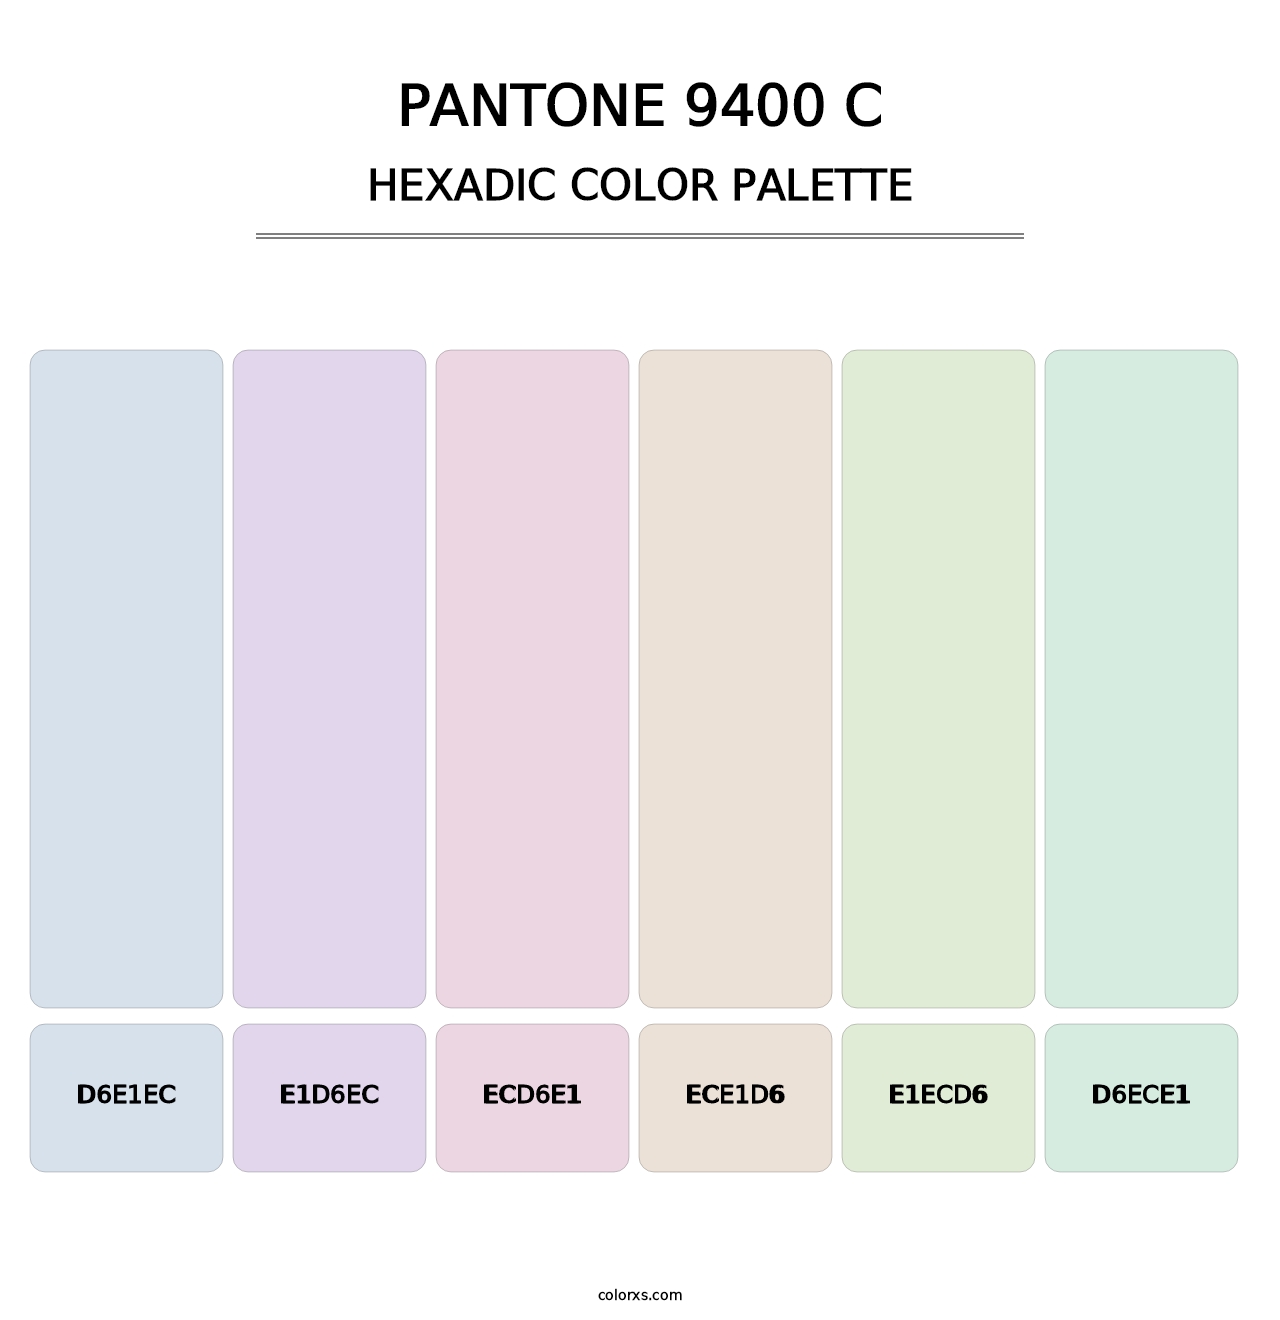 PANTONE 9400 C - Hexadic Color Palette